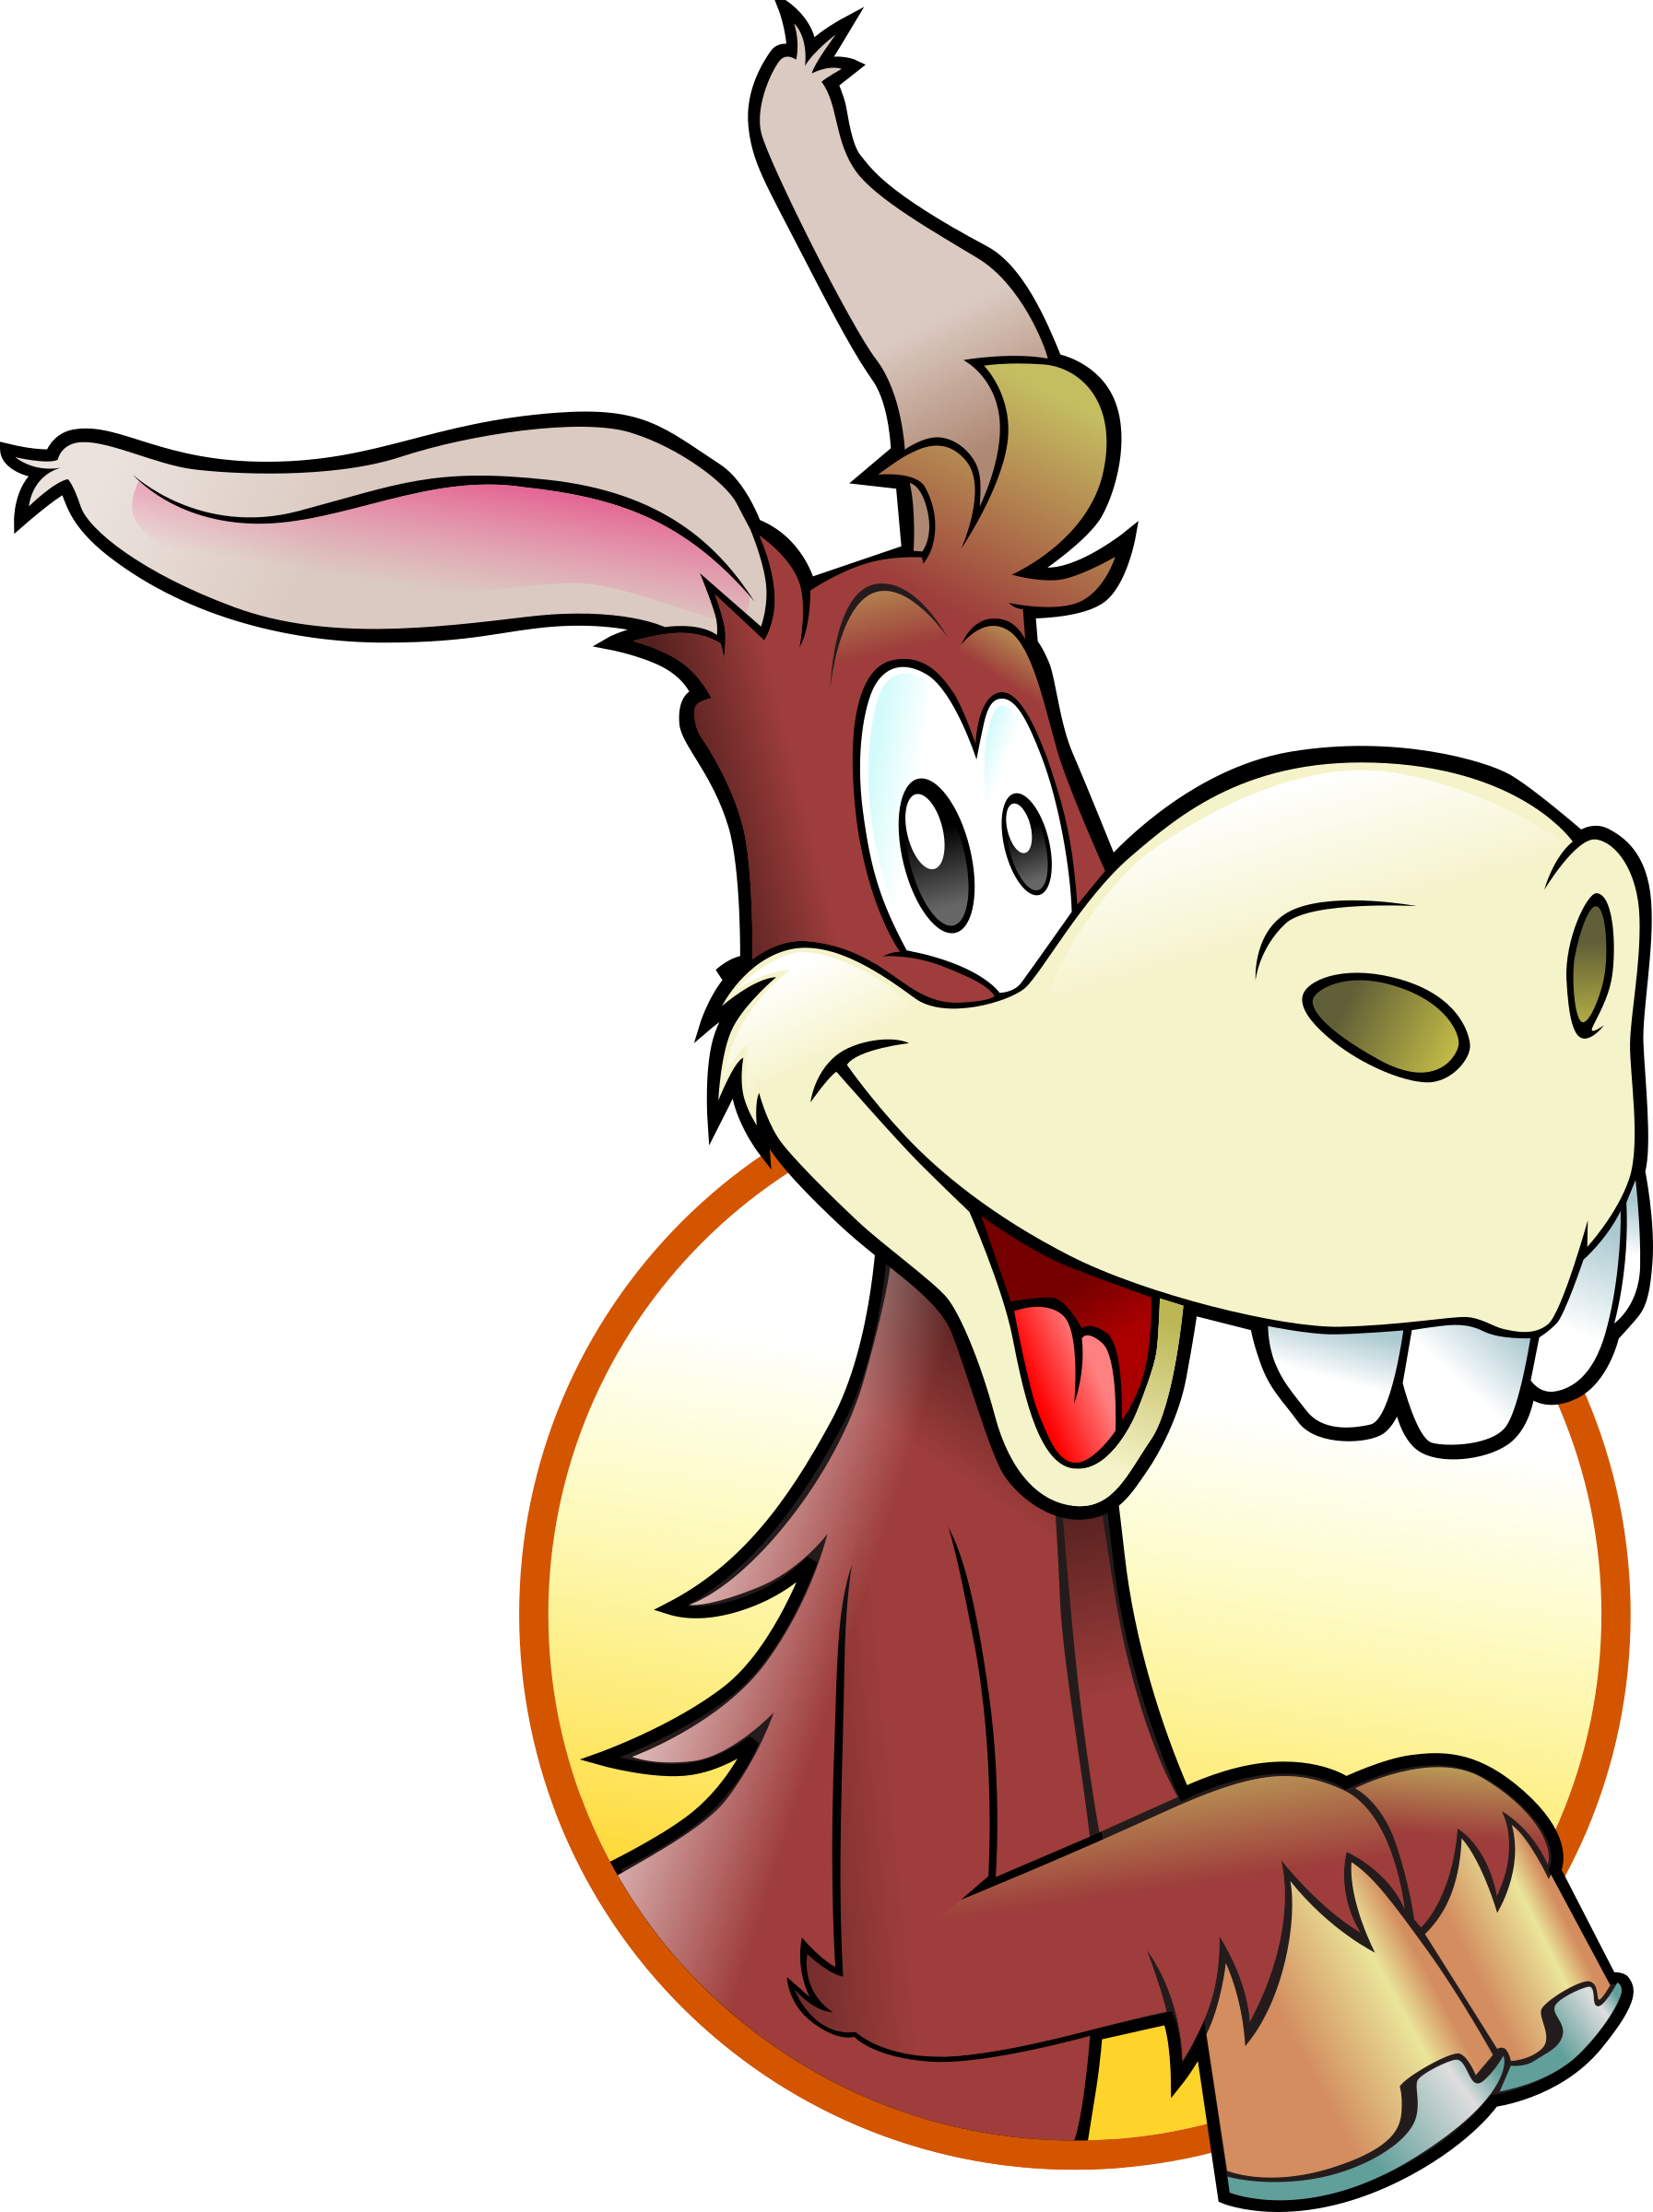 donkey clipart illustration